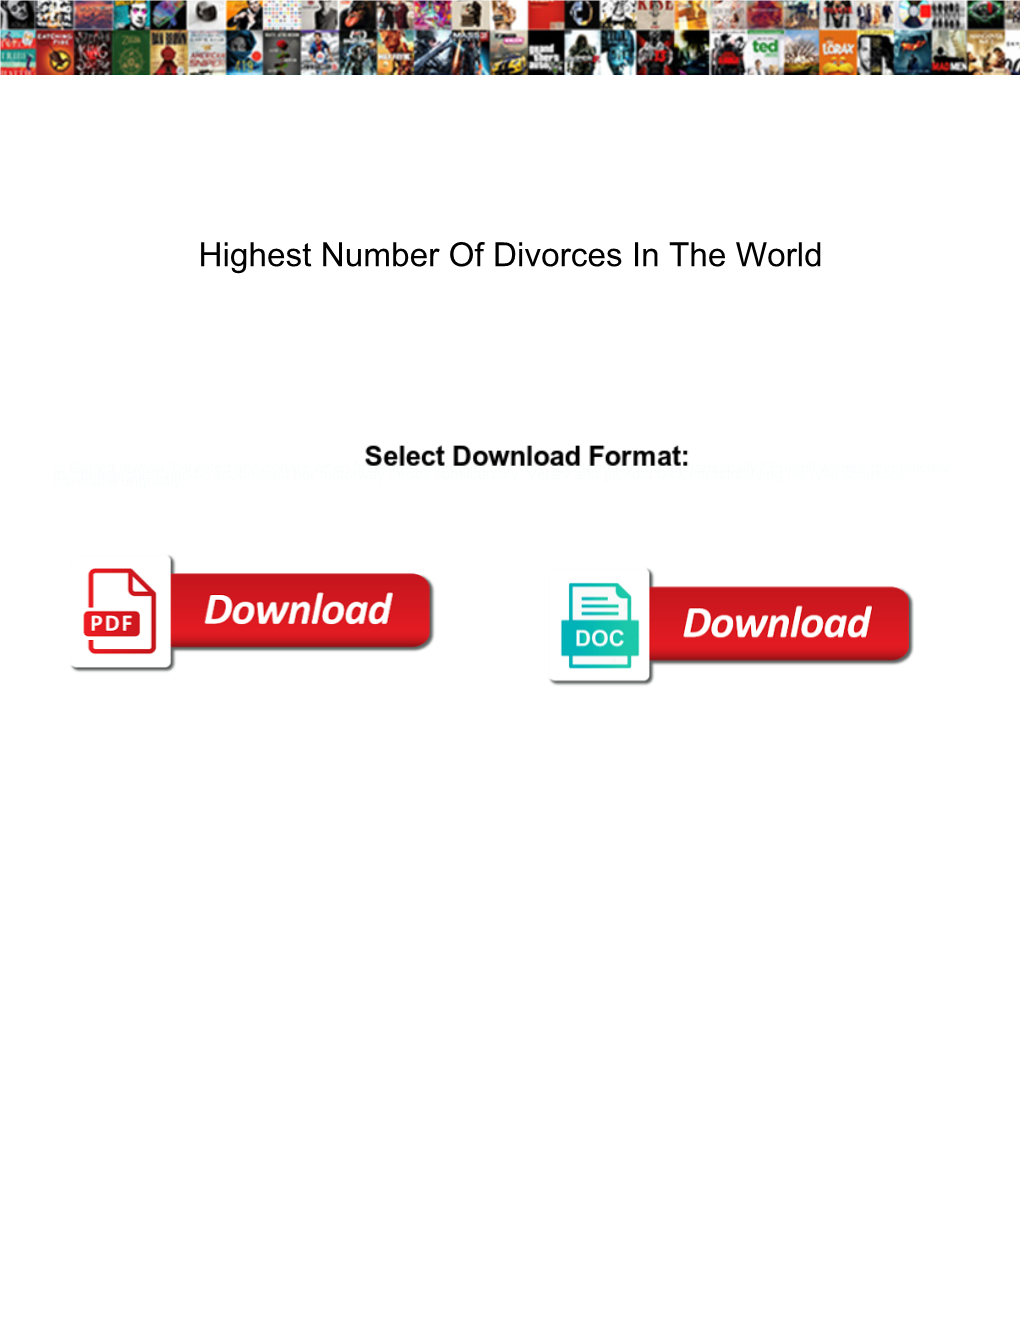 Highest Number of Divorces in the World